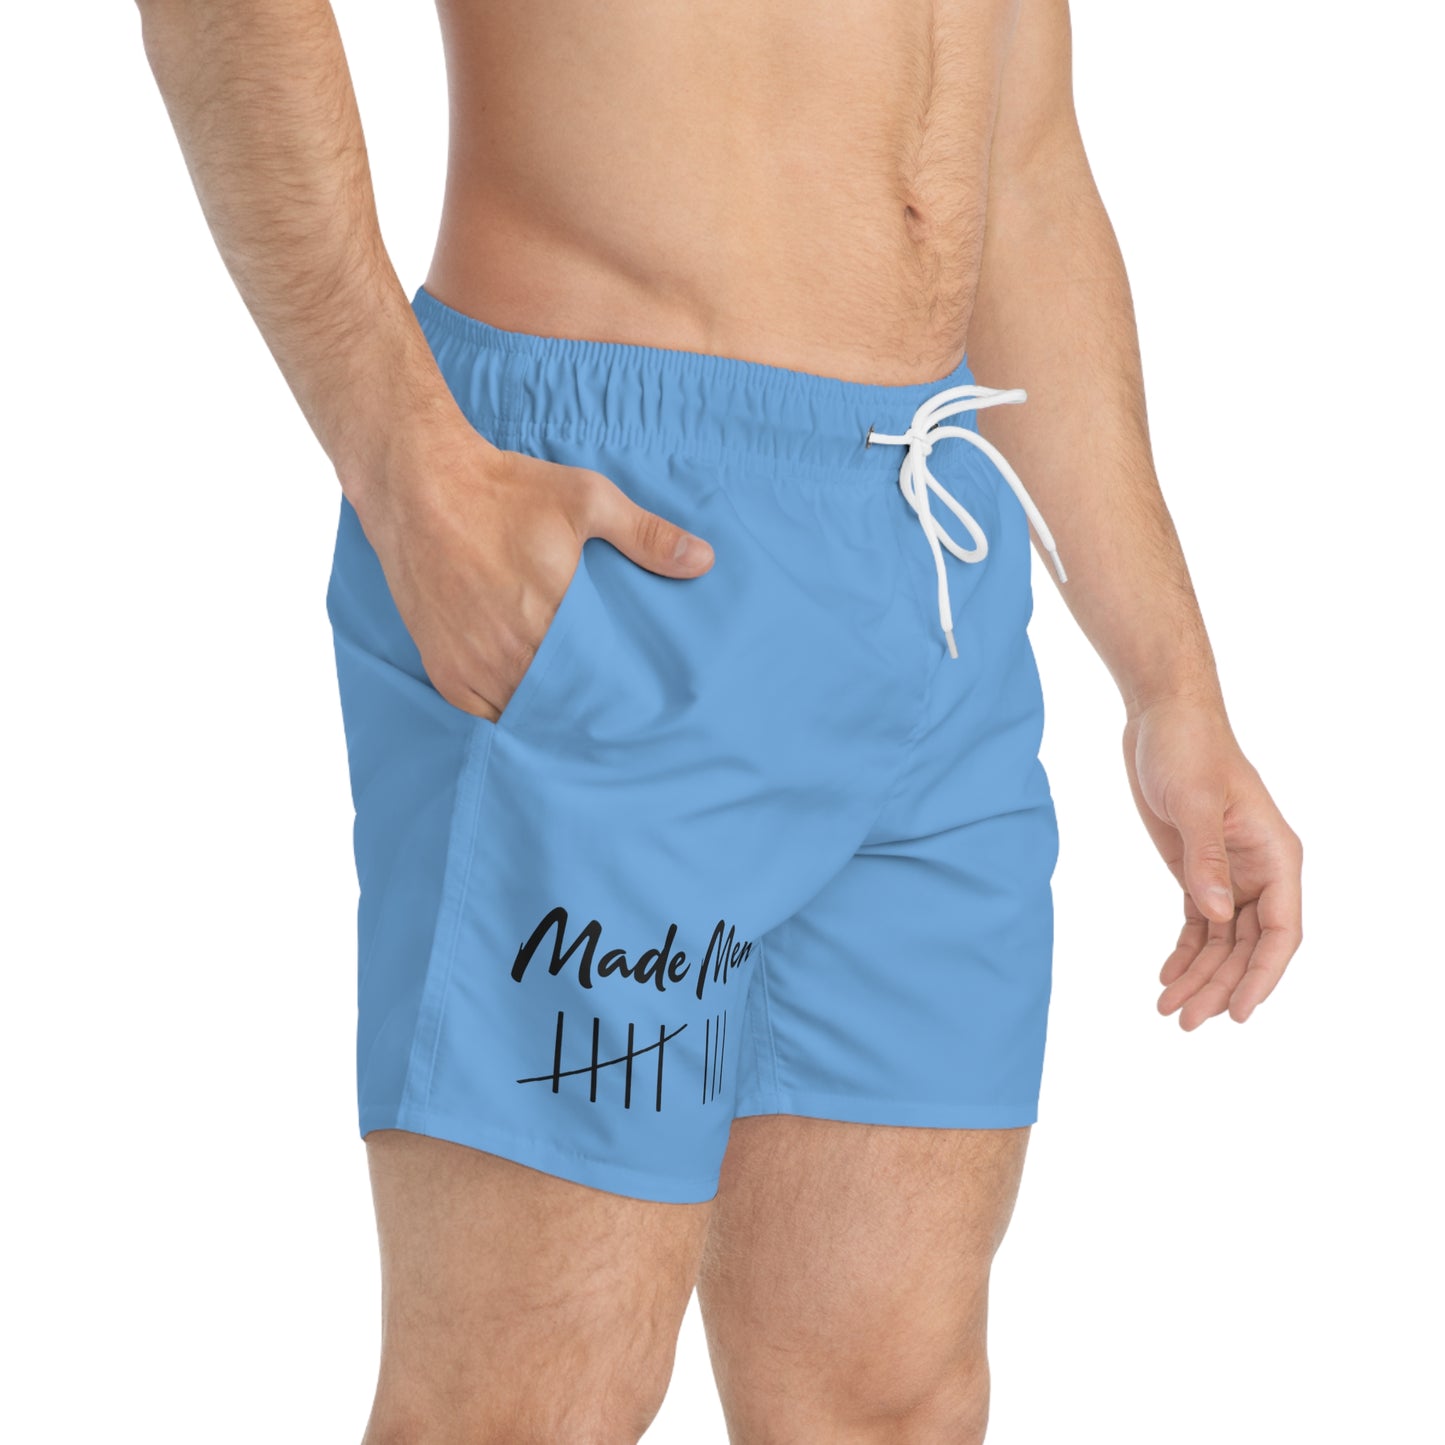 Made Men Shorts (Pearl blue)